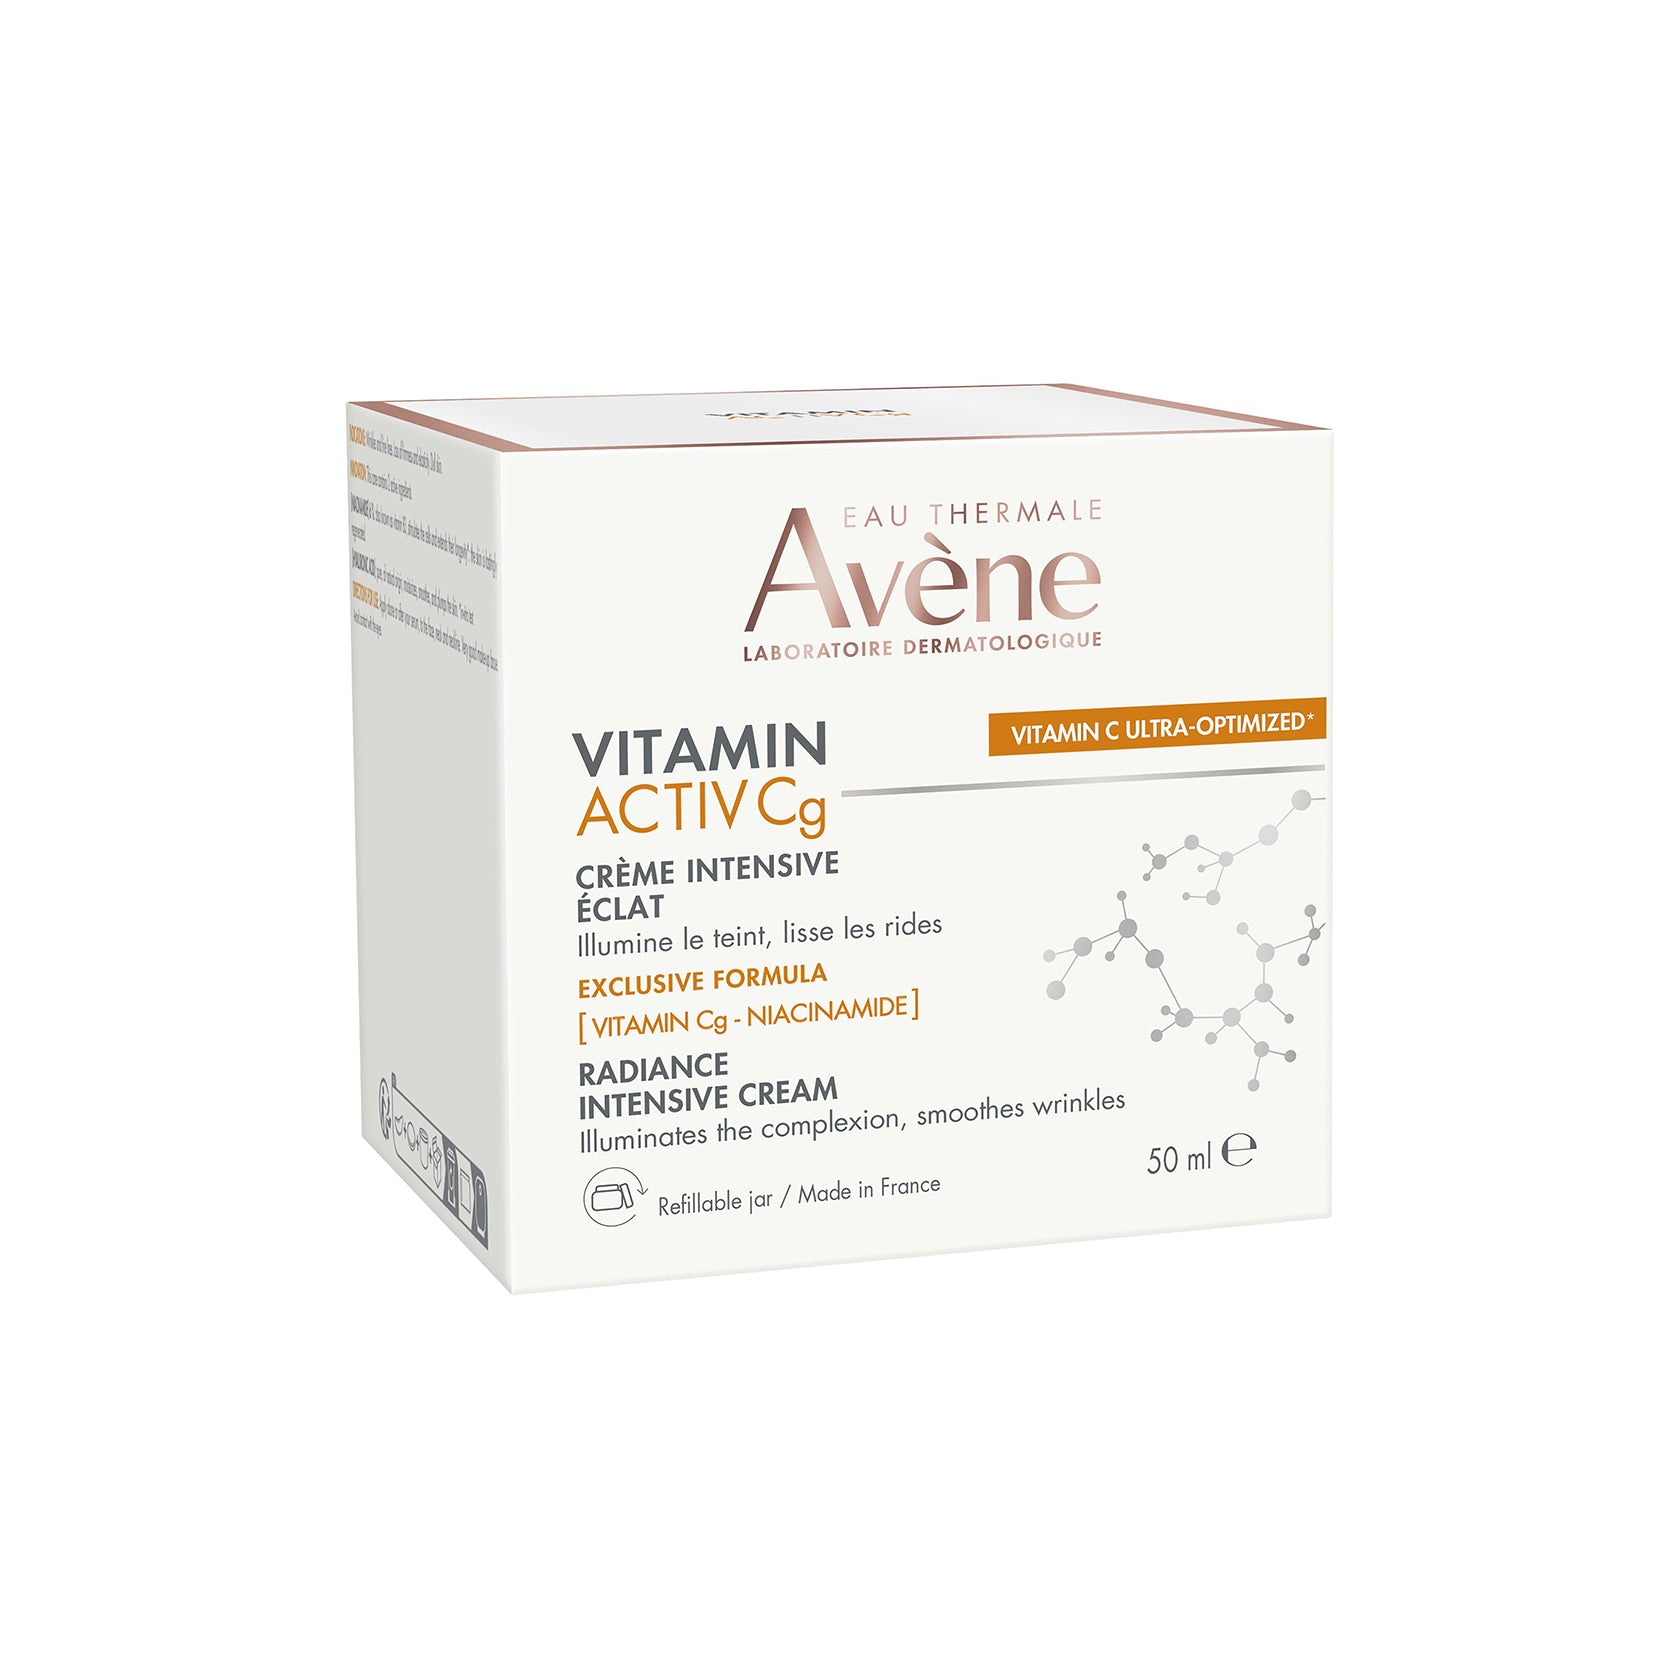 Avène Vitamin Activ Cg Radiance Intensive Cream 50ml (1.6 fl oz)